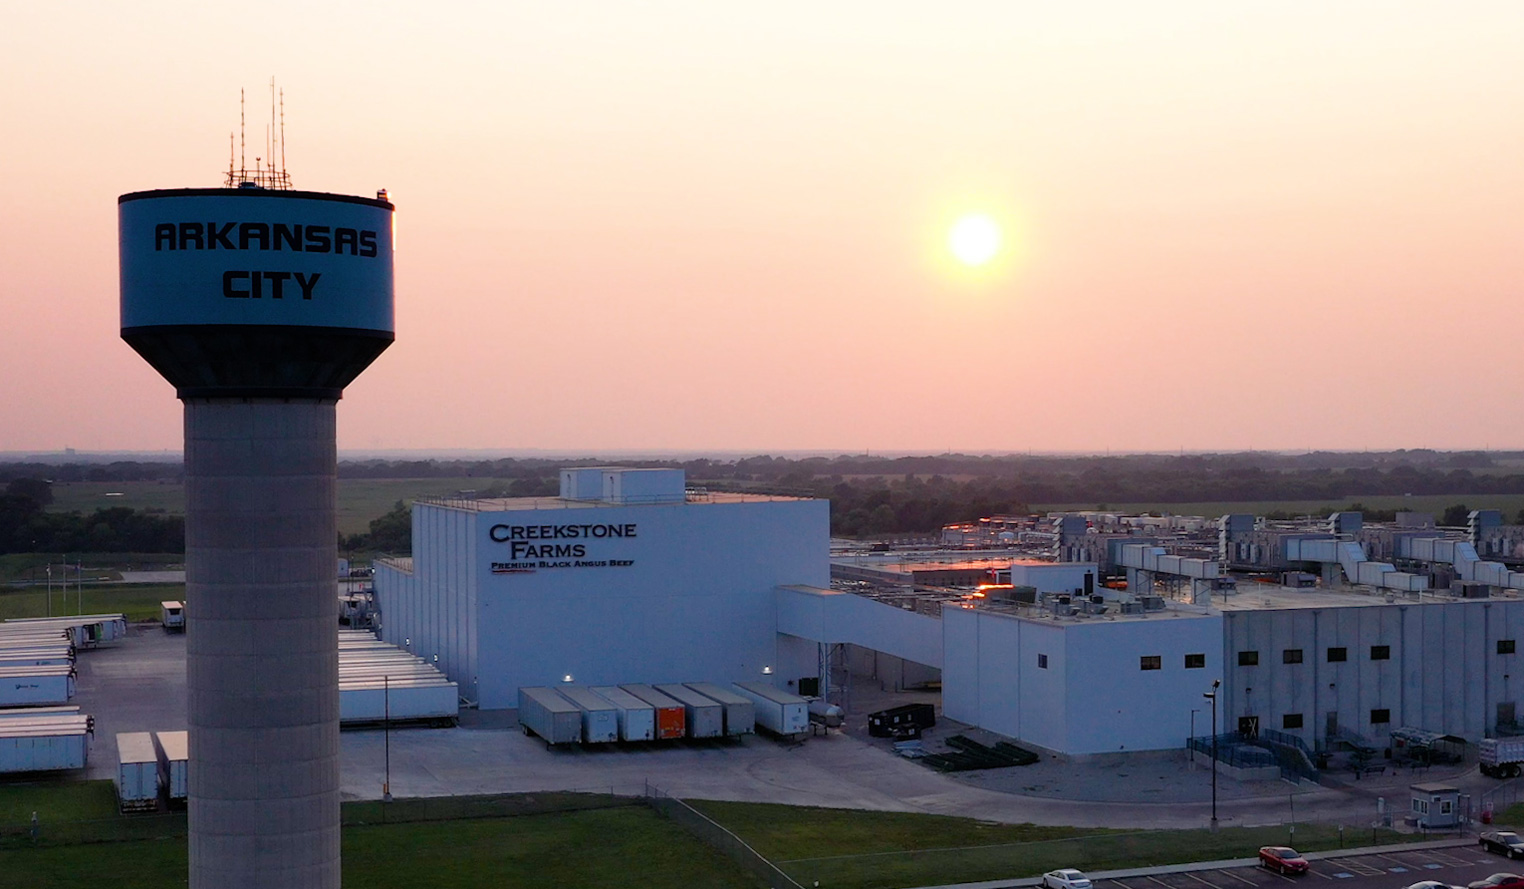 Creekstone Farms corporate facility in Wichita Kansas